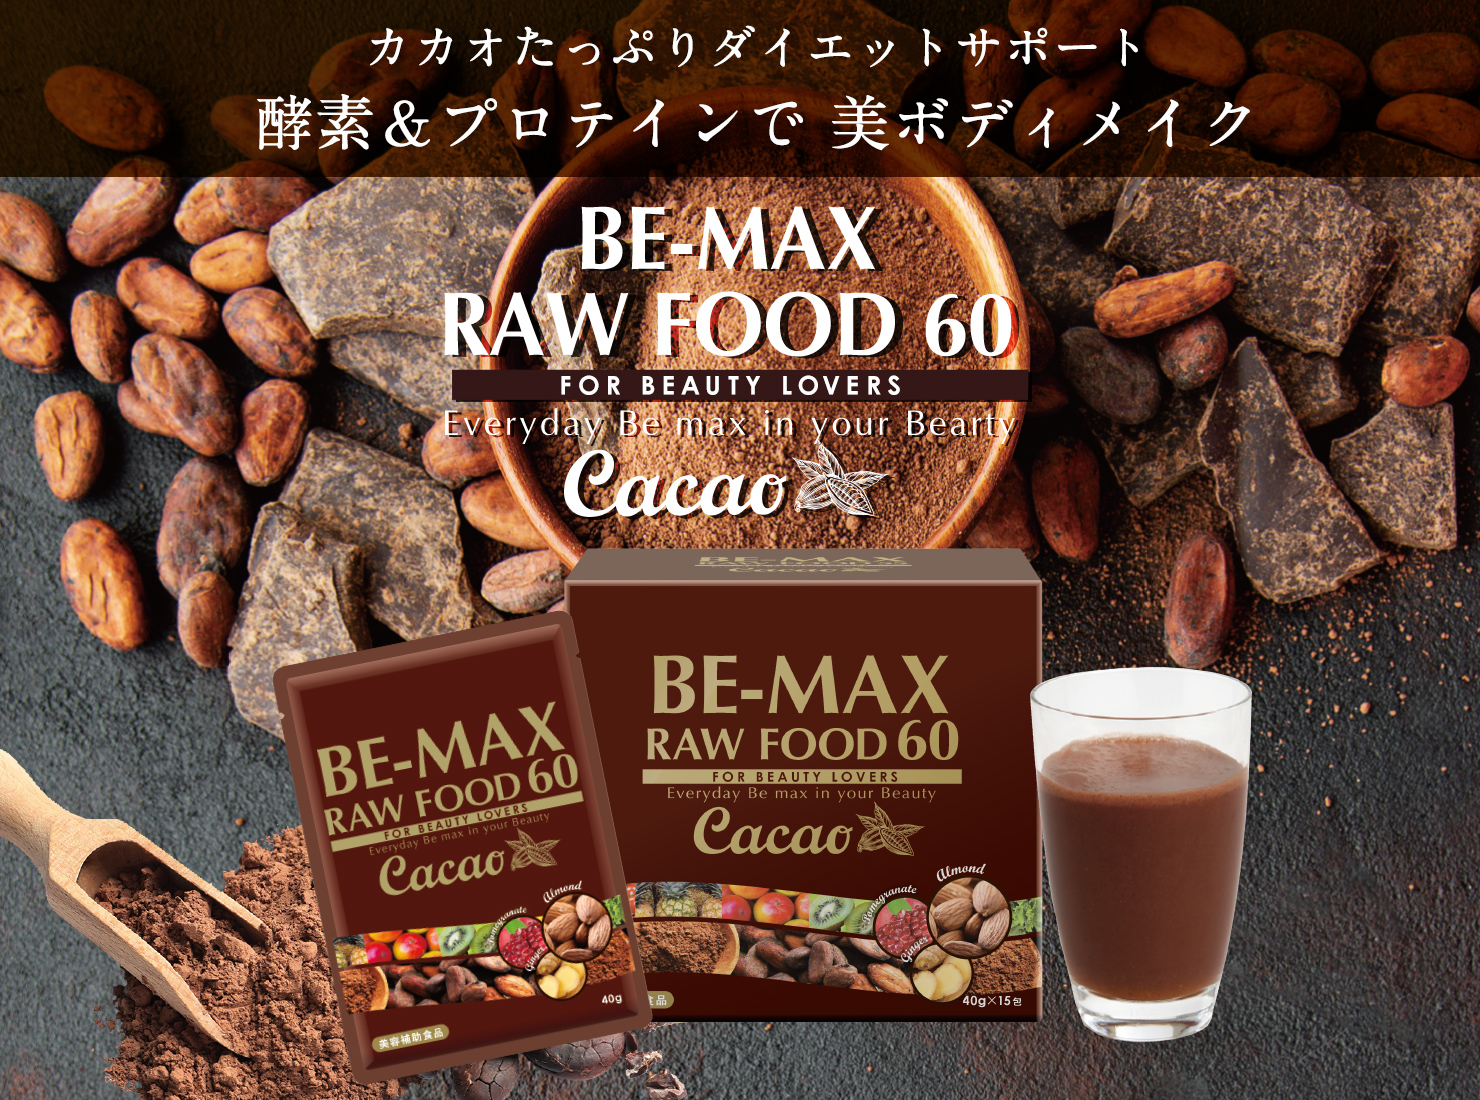 BE-MAX RAWFOOD 60 Cacao